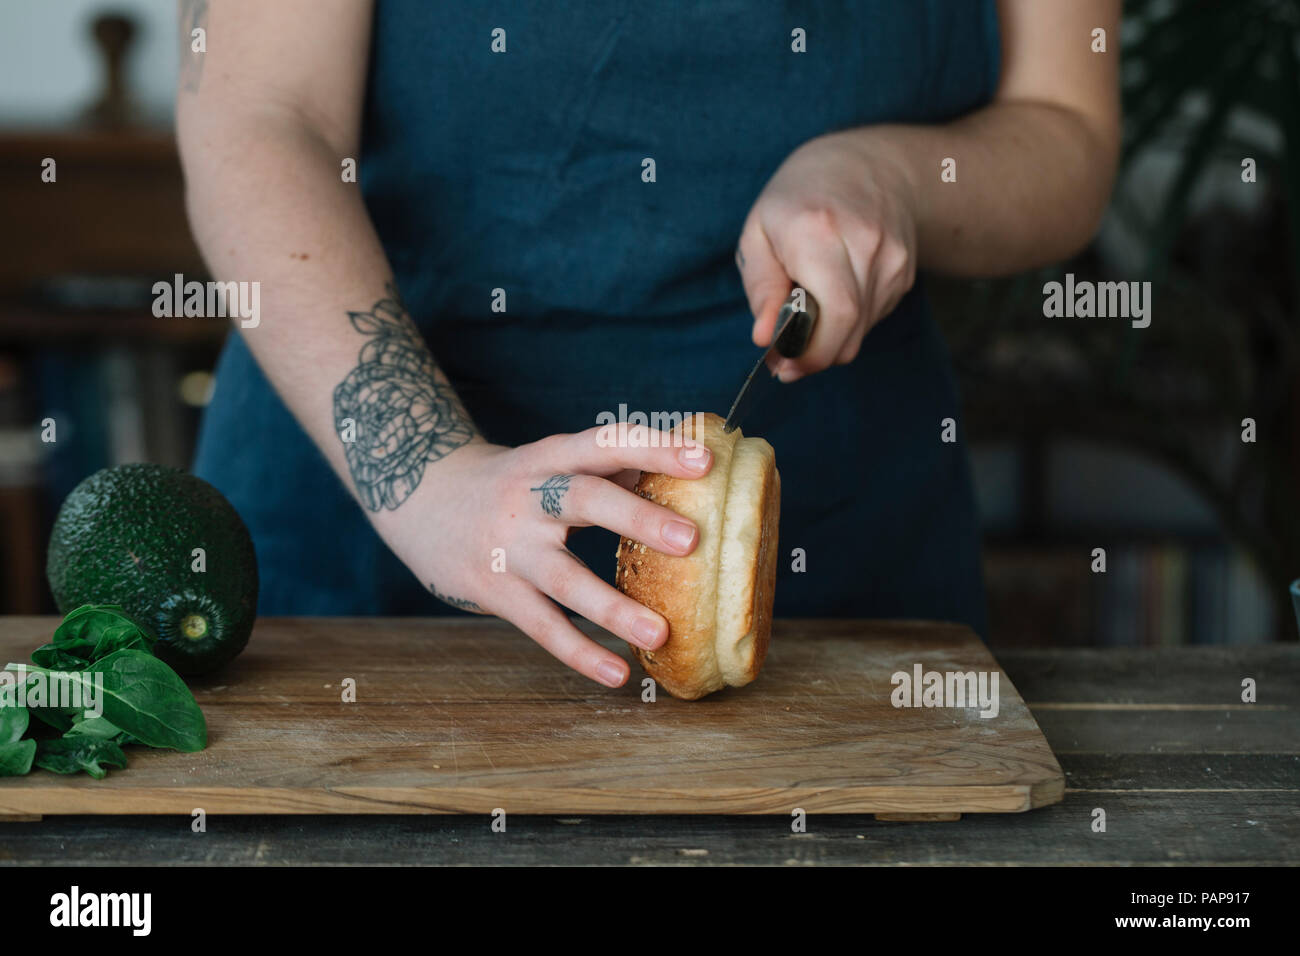 Woman preparing vegan burger, cutting bread roll Stock Photo